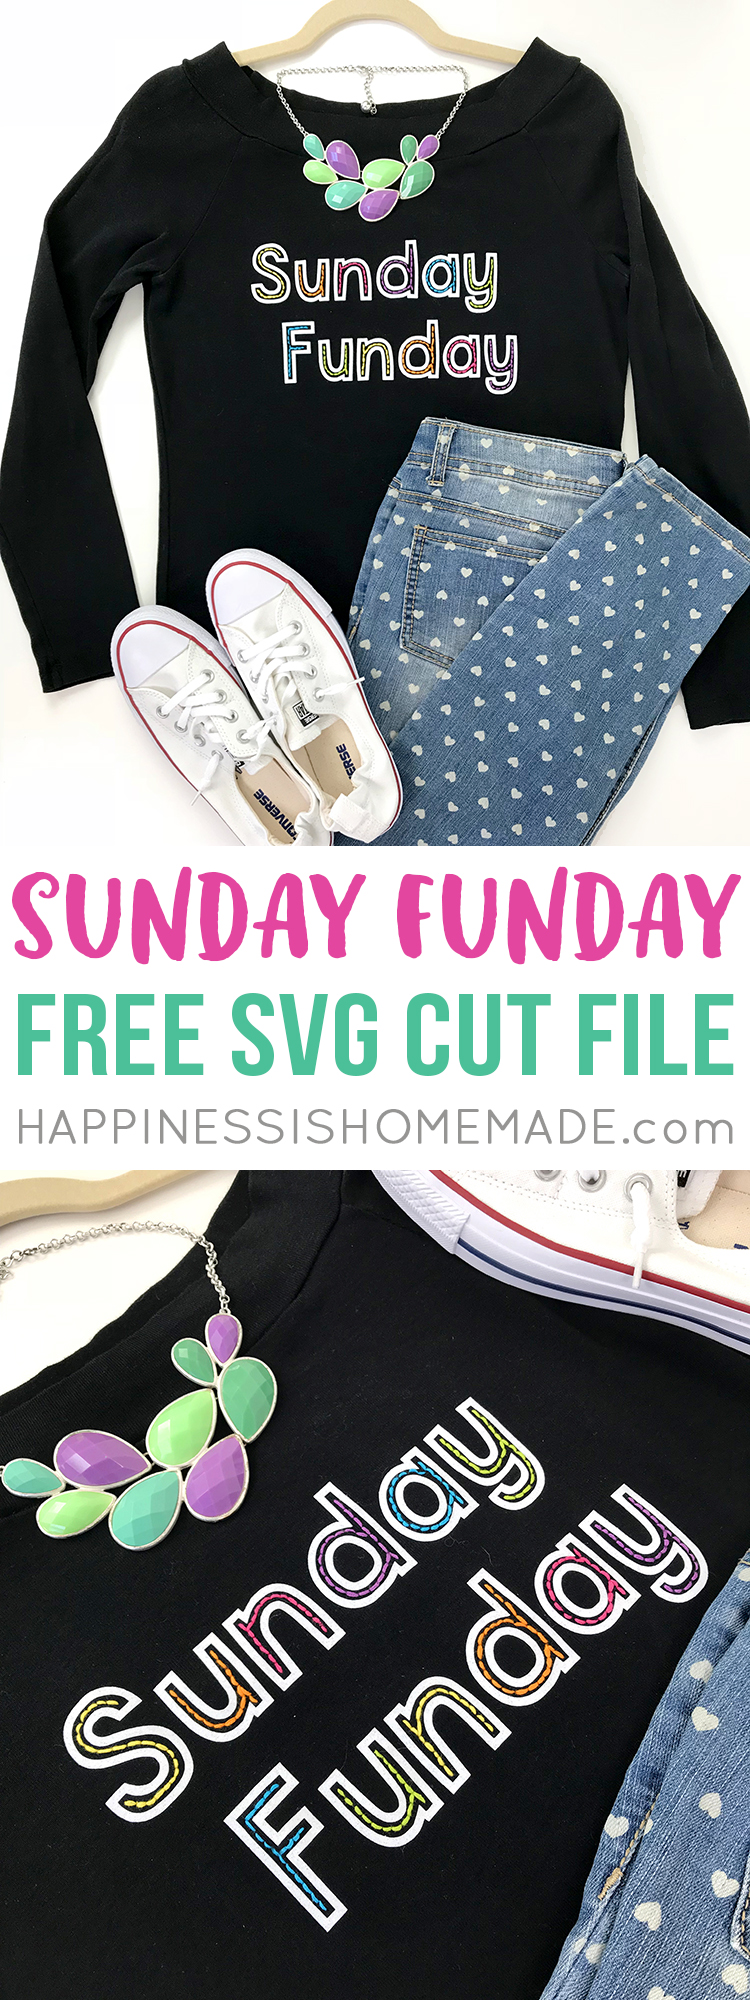 sunday funday free svg cut file